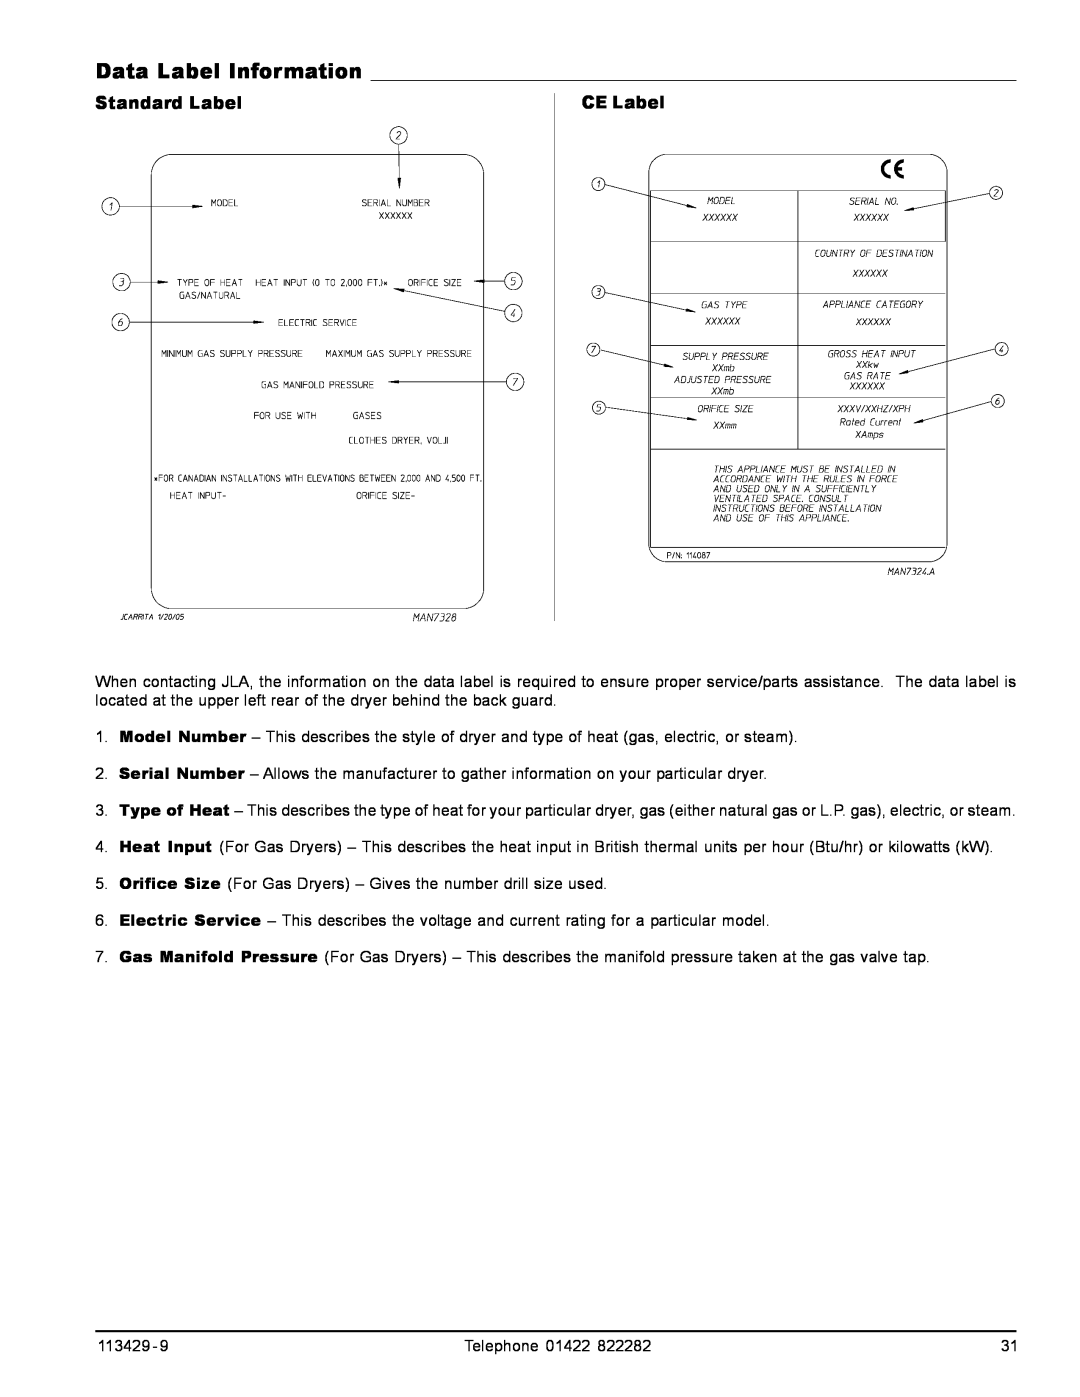 American Dryer Corp T50, T75, T30, T20 manual Data Label Information, Standard Label, CE Label 